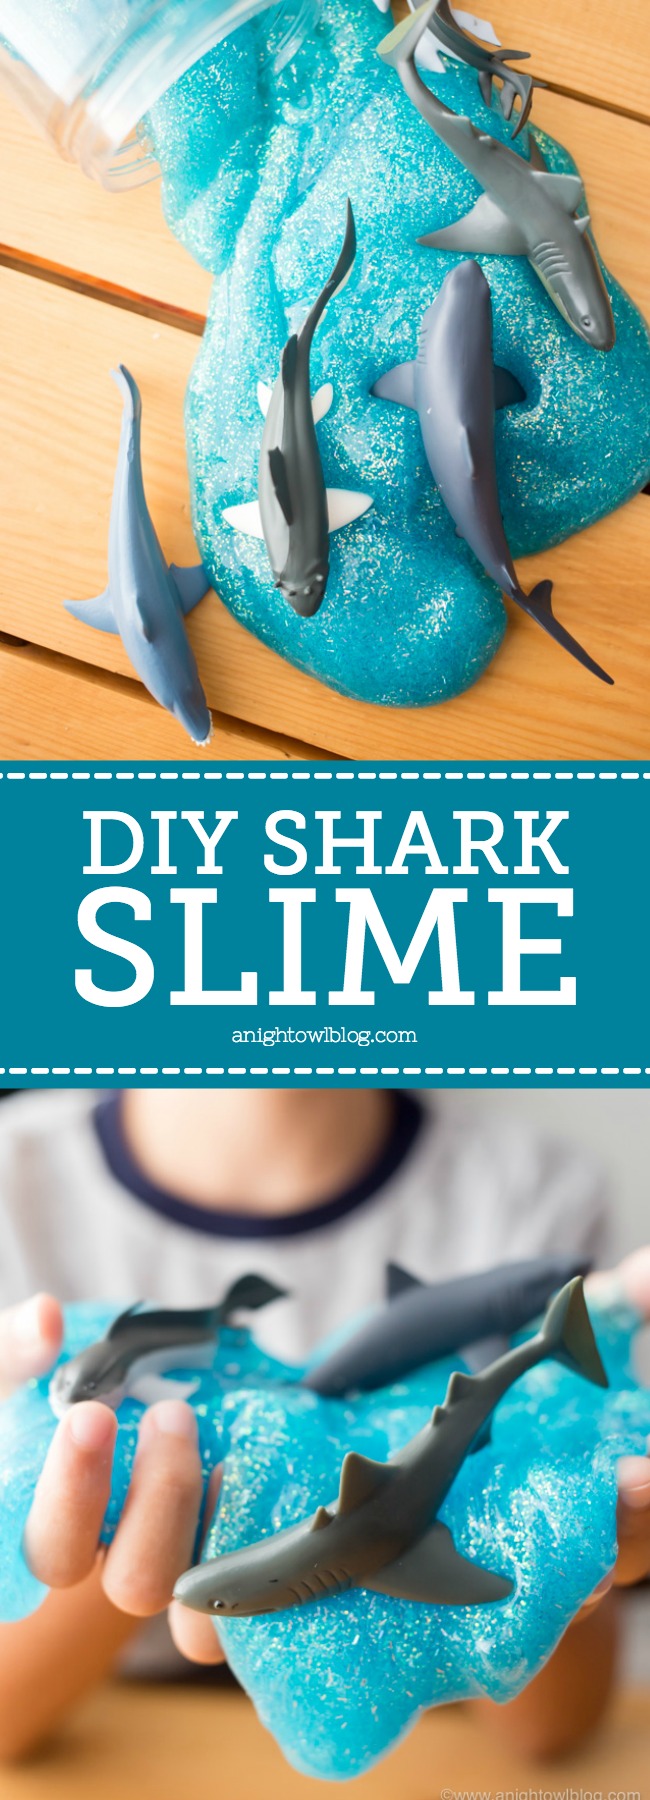 DIY Shark Slime